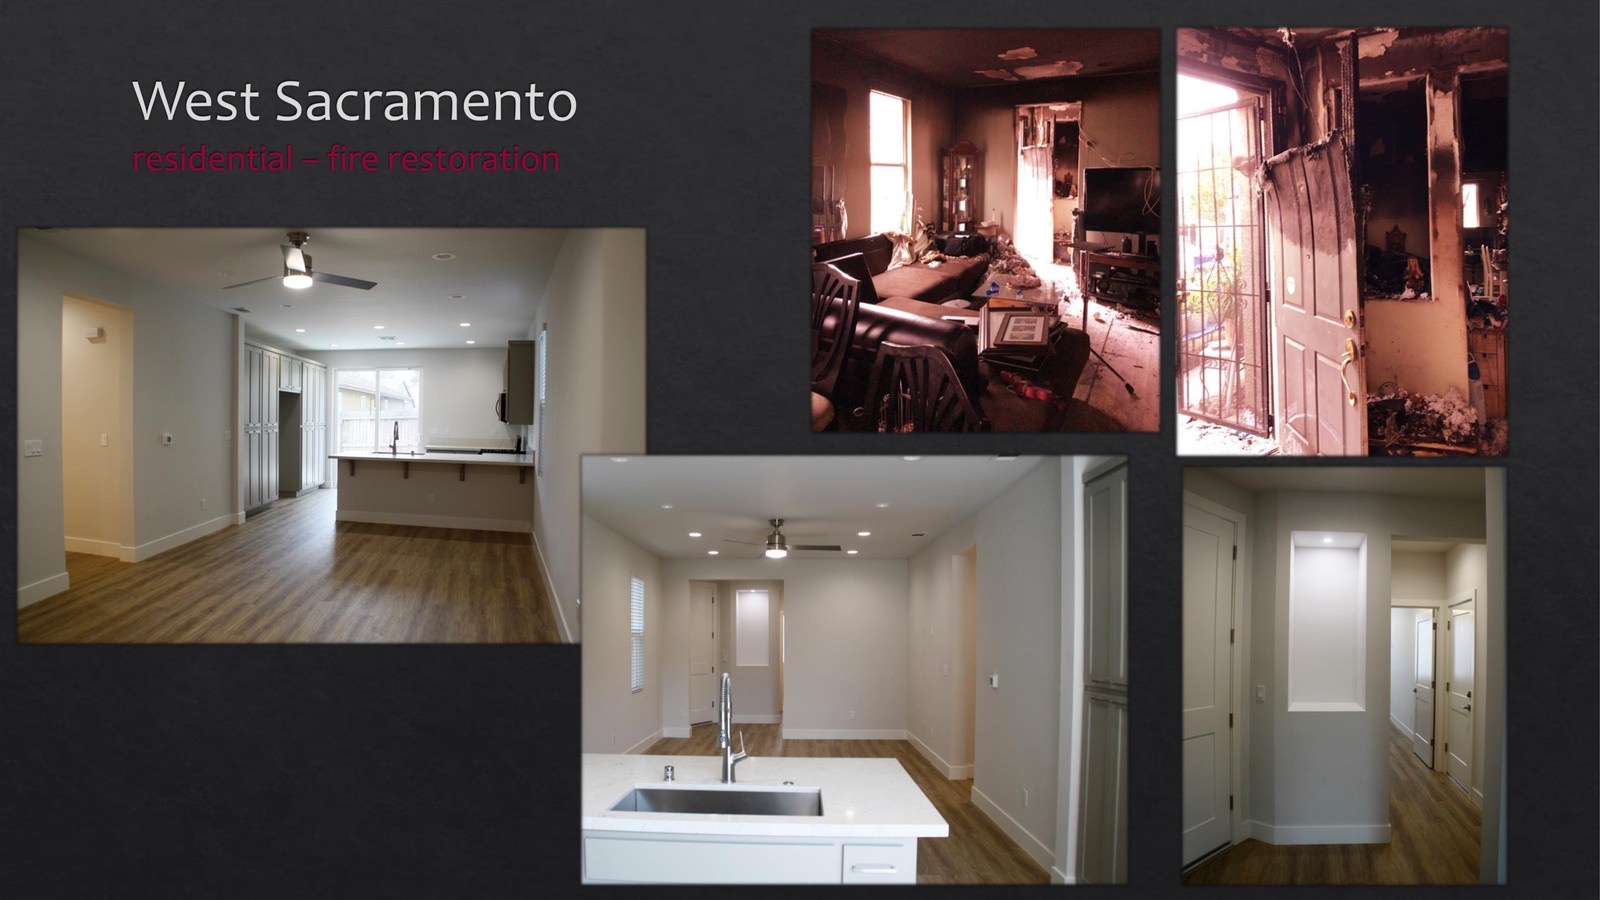 West Sacramento Residential fire restoration - kitchen + entryway